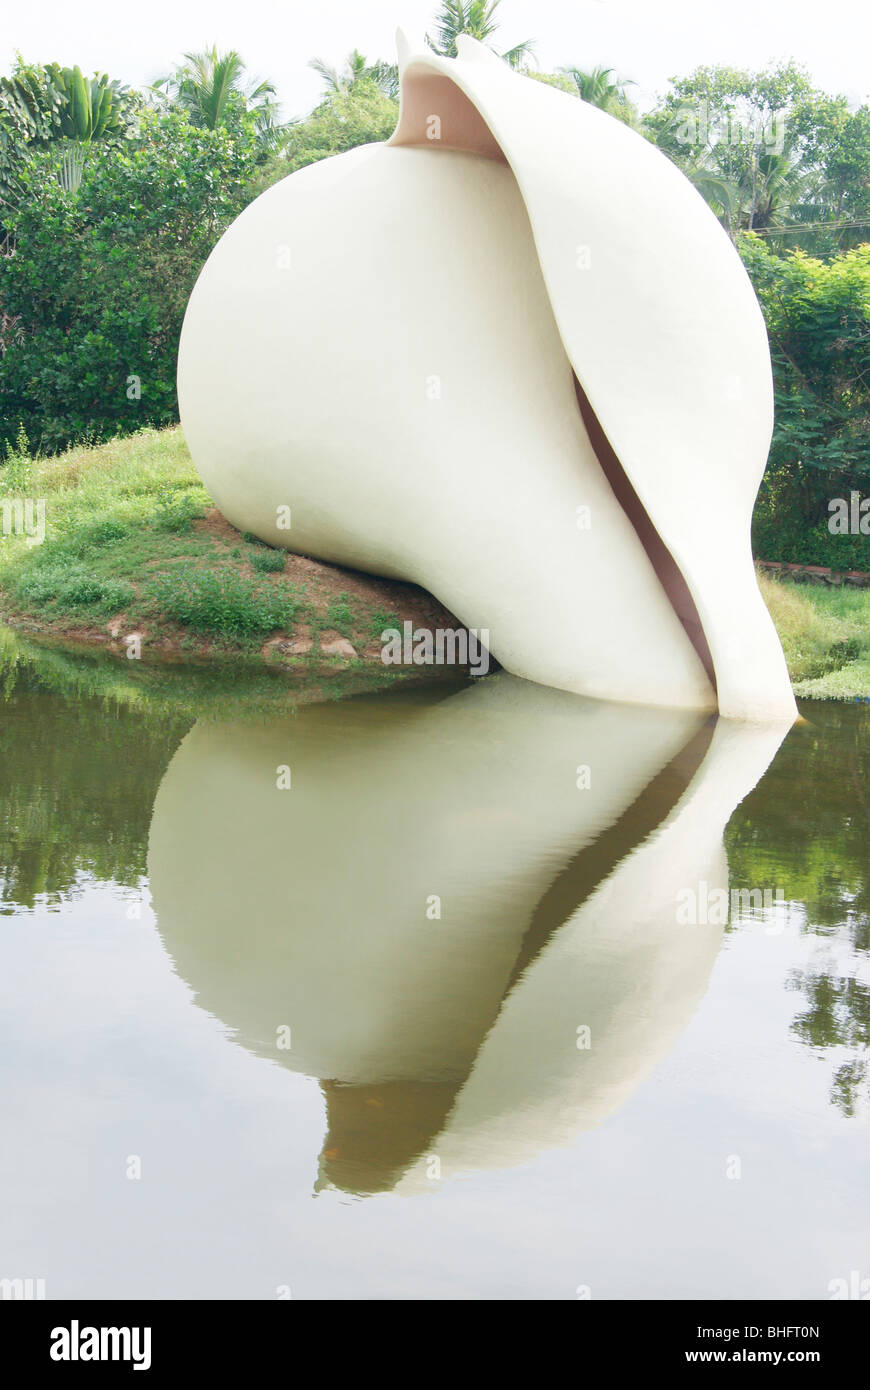 Conch sculpture from veli Lake garden park in Kerala,India Stock Photo